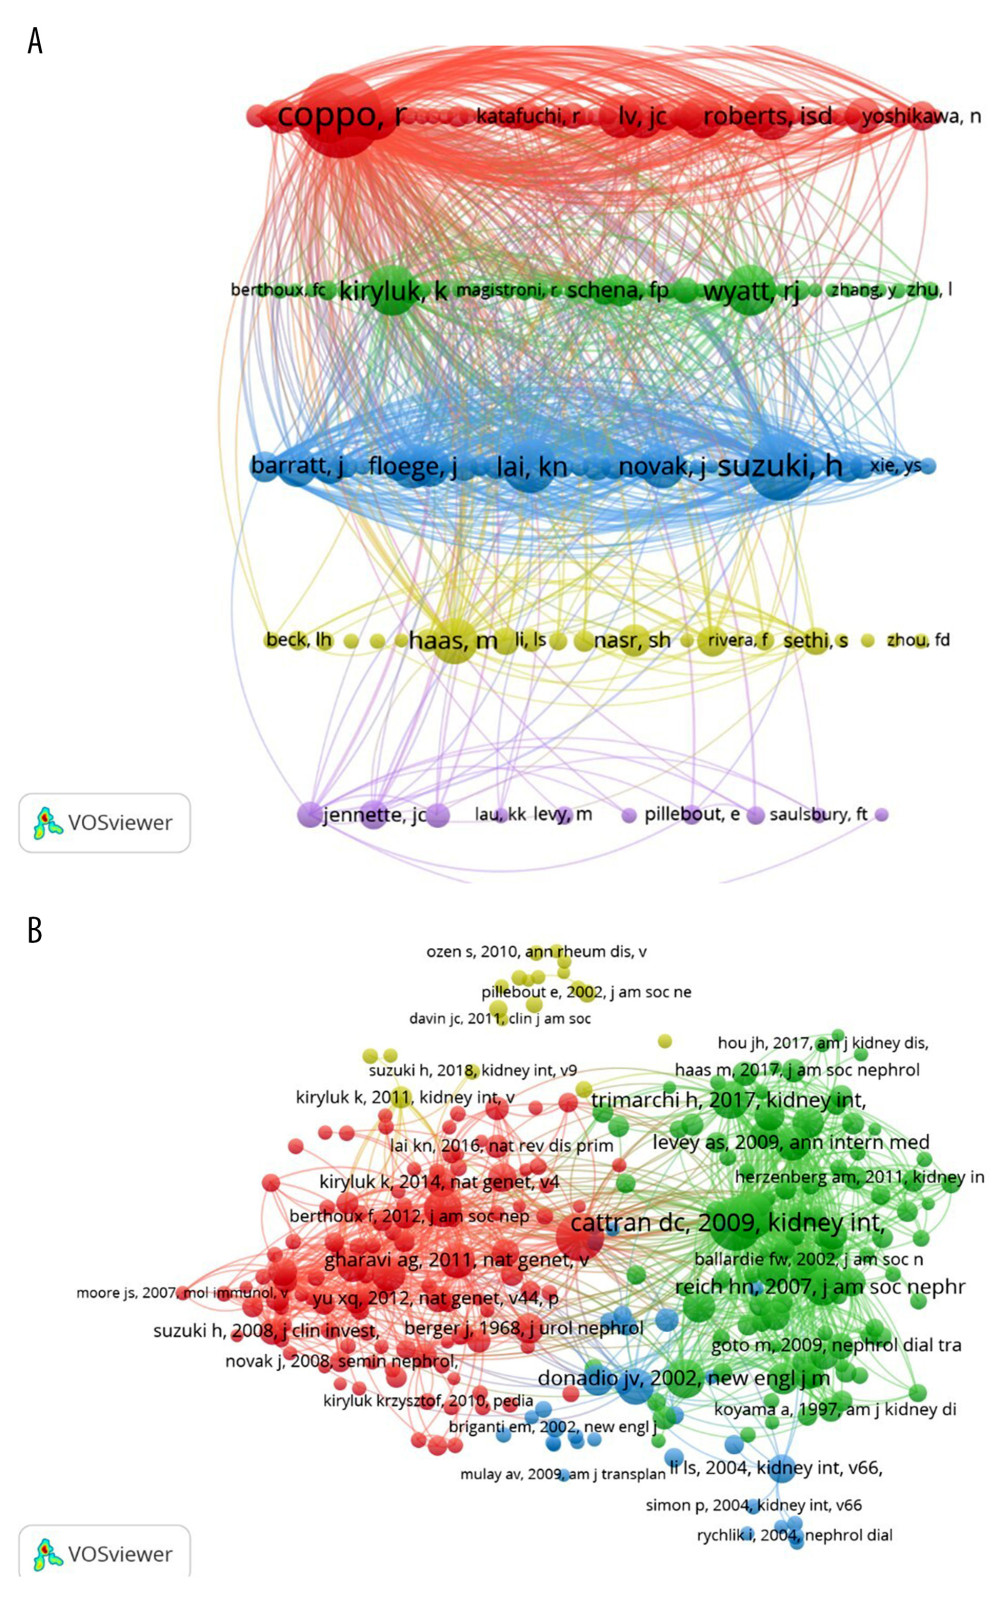 (A) The author co-authorship network of IgA nephropathy. (B) The co-citation cited author network of IgA nephropathy.